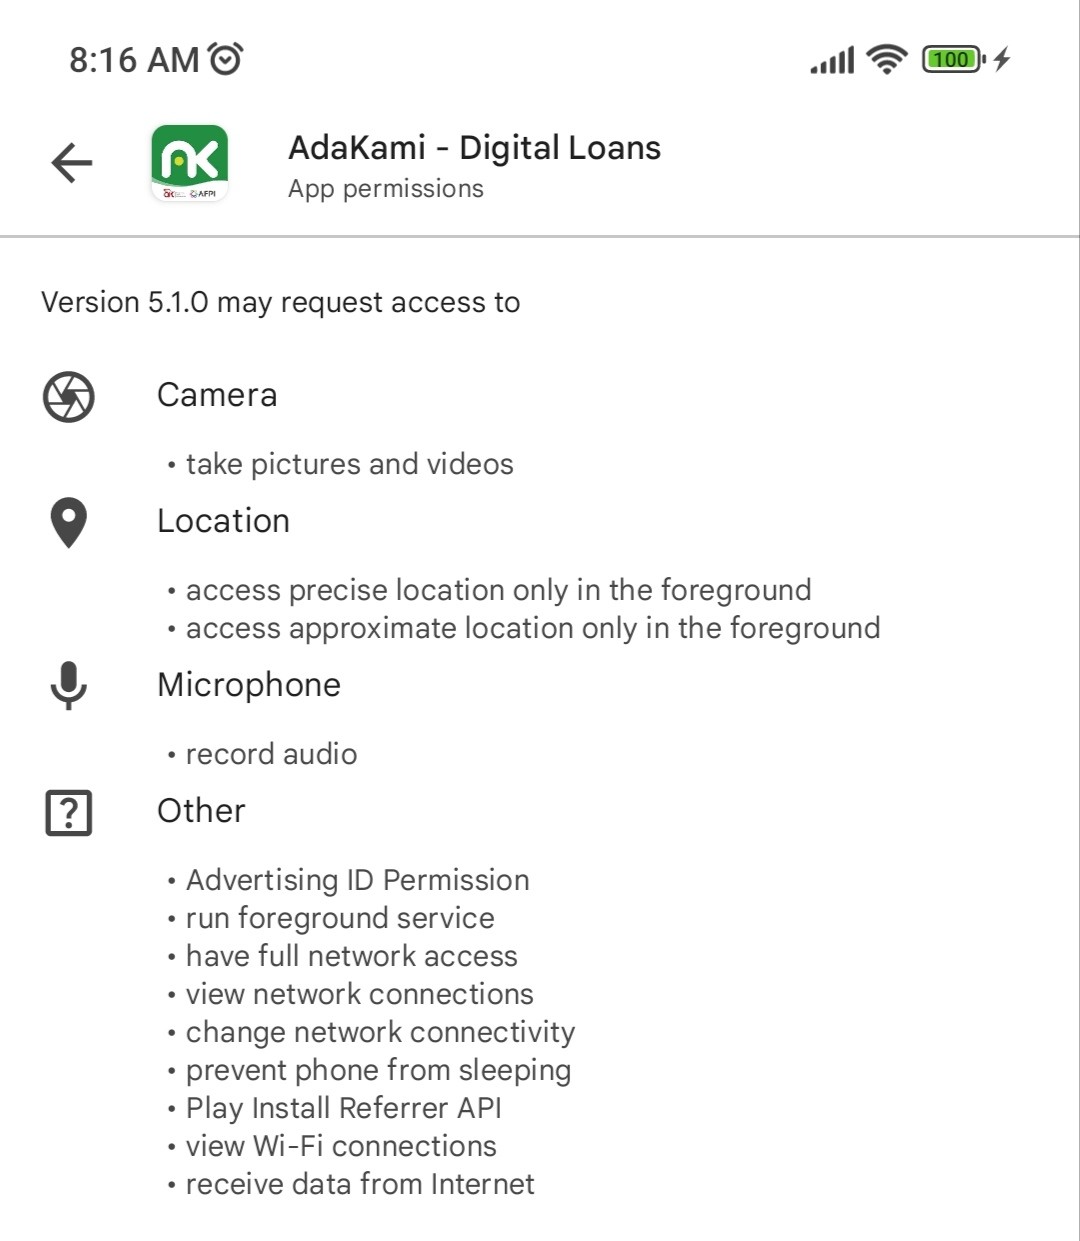 AdaKami - App permissions